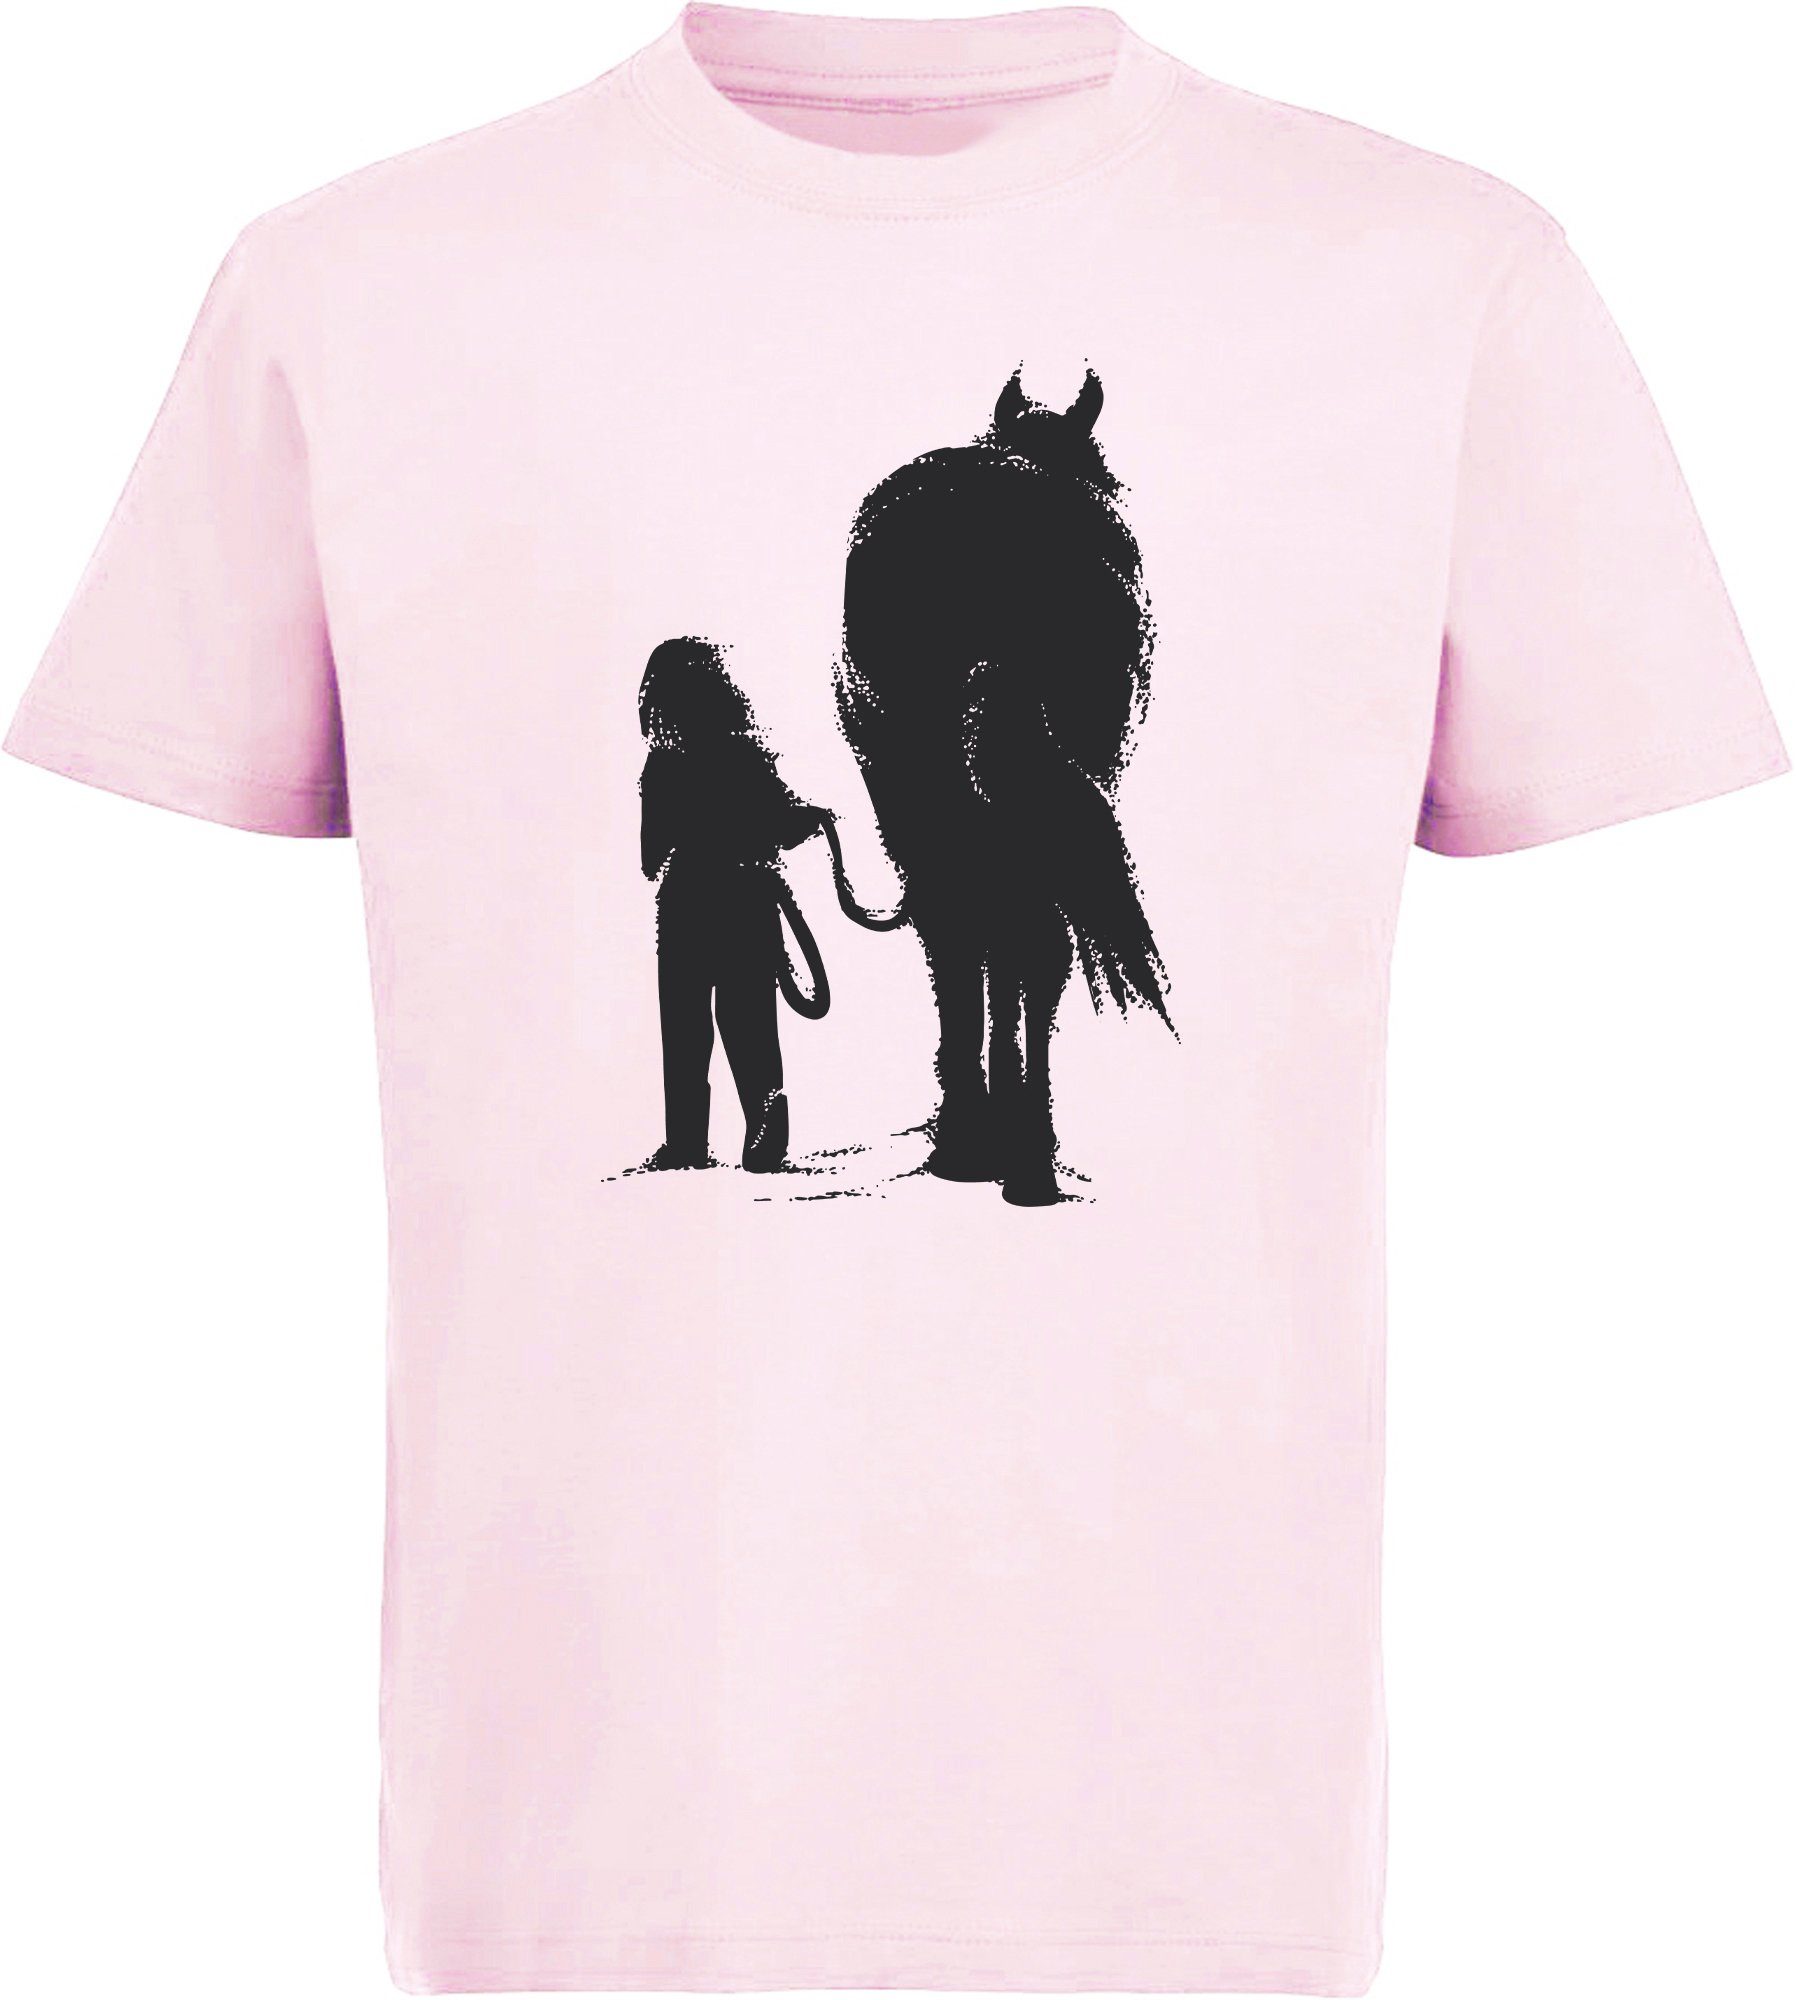 MyDesign24 T-Shirt Kinder Print Shirt bedruckt - Mädchen & Pferd beim Spaziergang Baumwollshirt mit Aufdruck, i250 rosa